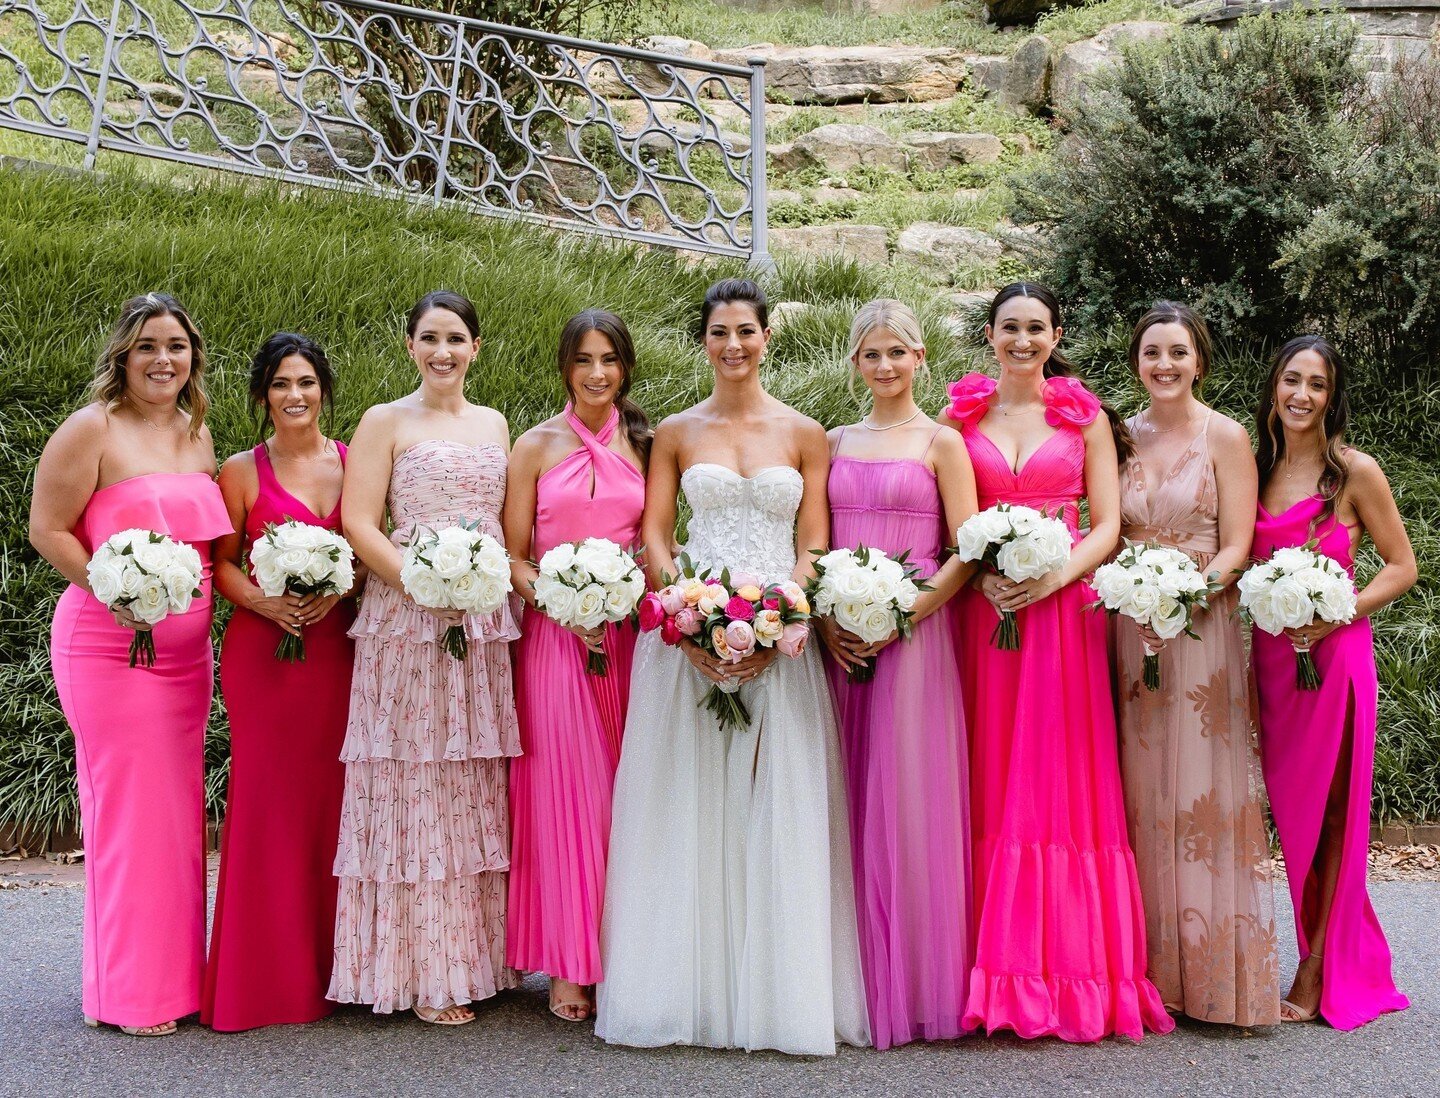 On W̶e̶d̶n̶e̶s̶d̶a̶y̶s̶ wedding day we wear pink 💐🩷 😍

📷 @lexypiercephoto